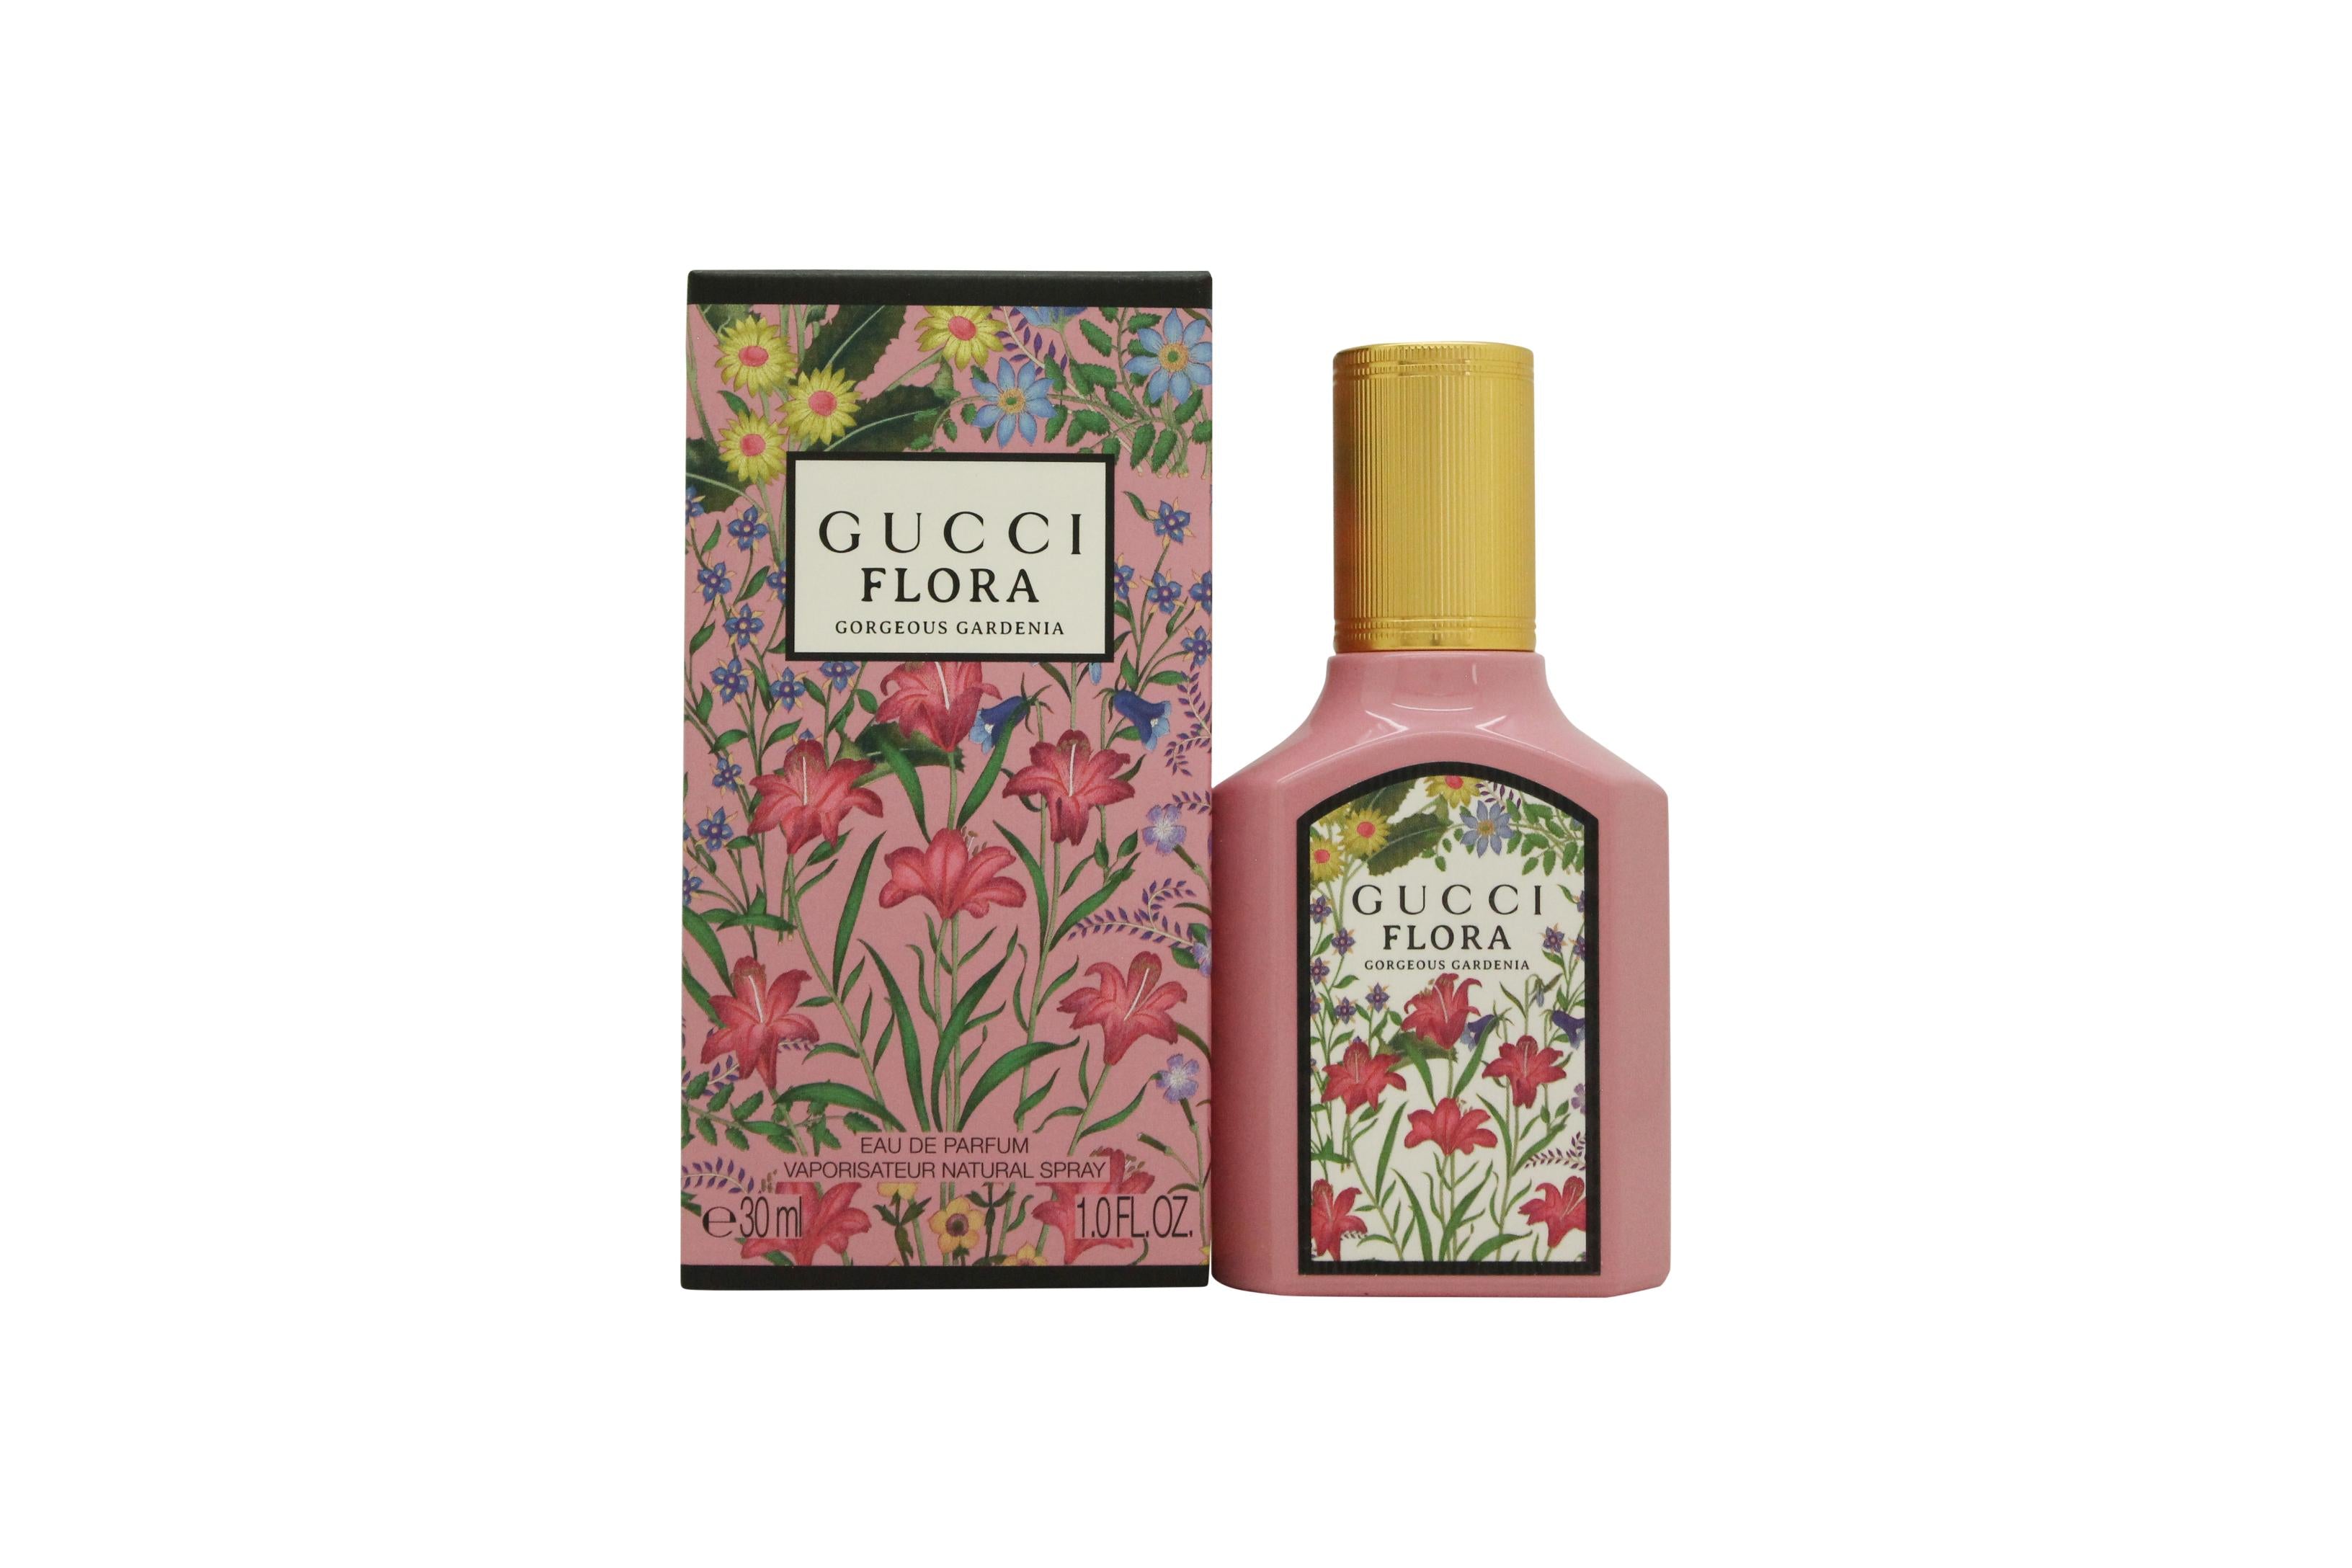 View Gucci Flora Gorgeous Gardenia Eau de Parfum 30ml Spray information